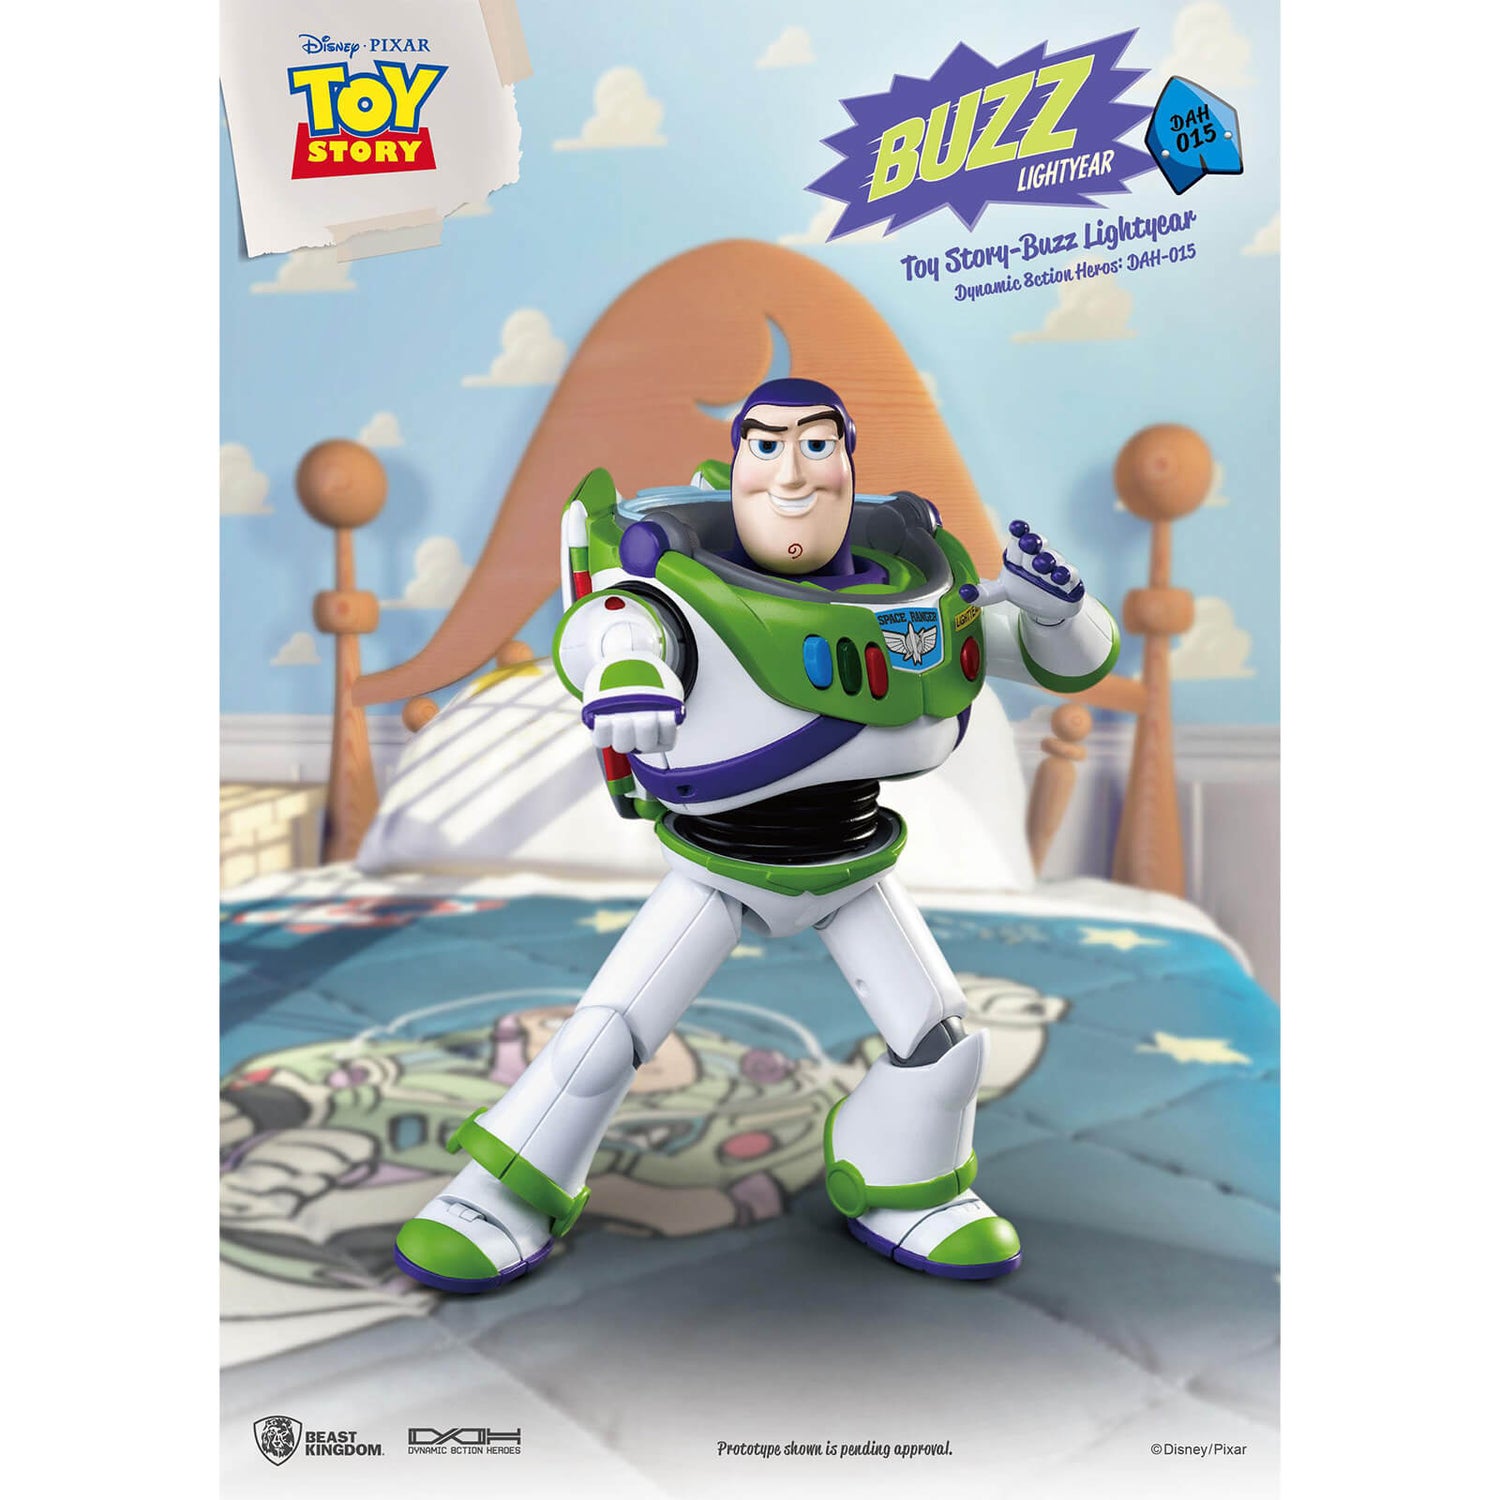 Beast Kingdom Toy Story Dynamic 8ction Heroes Figure - Buzz Lightyear